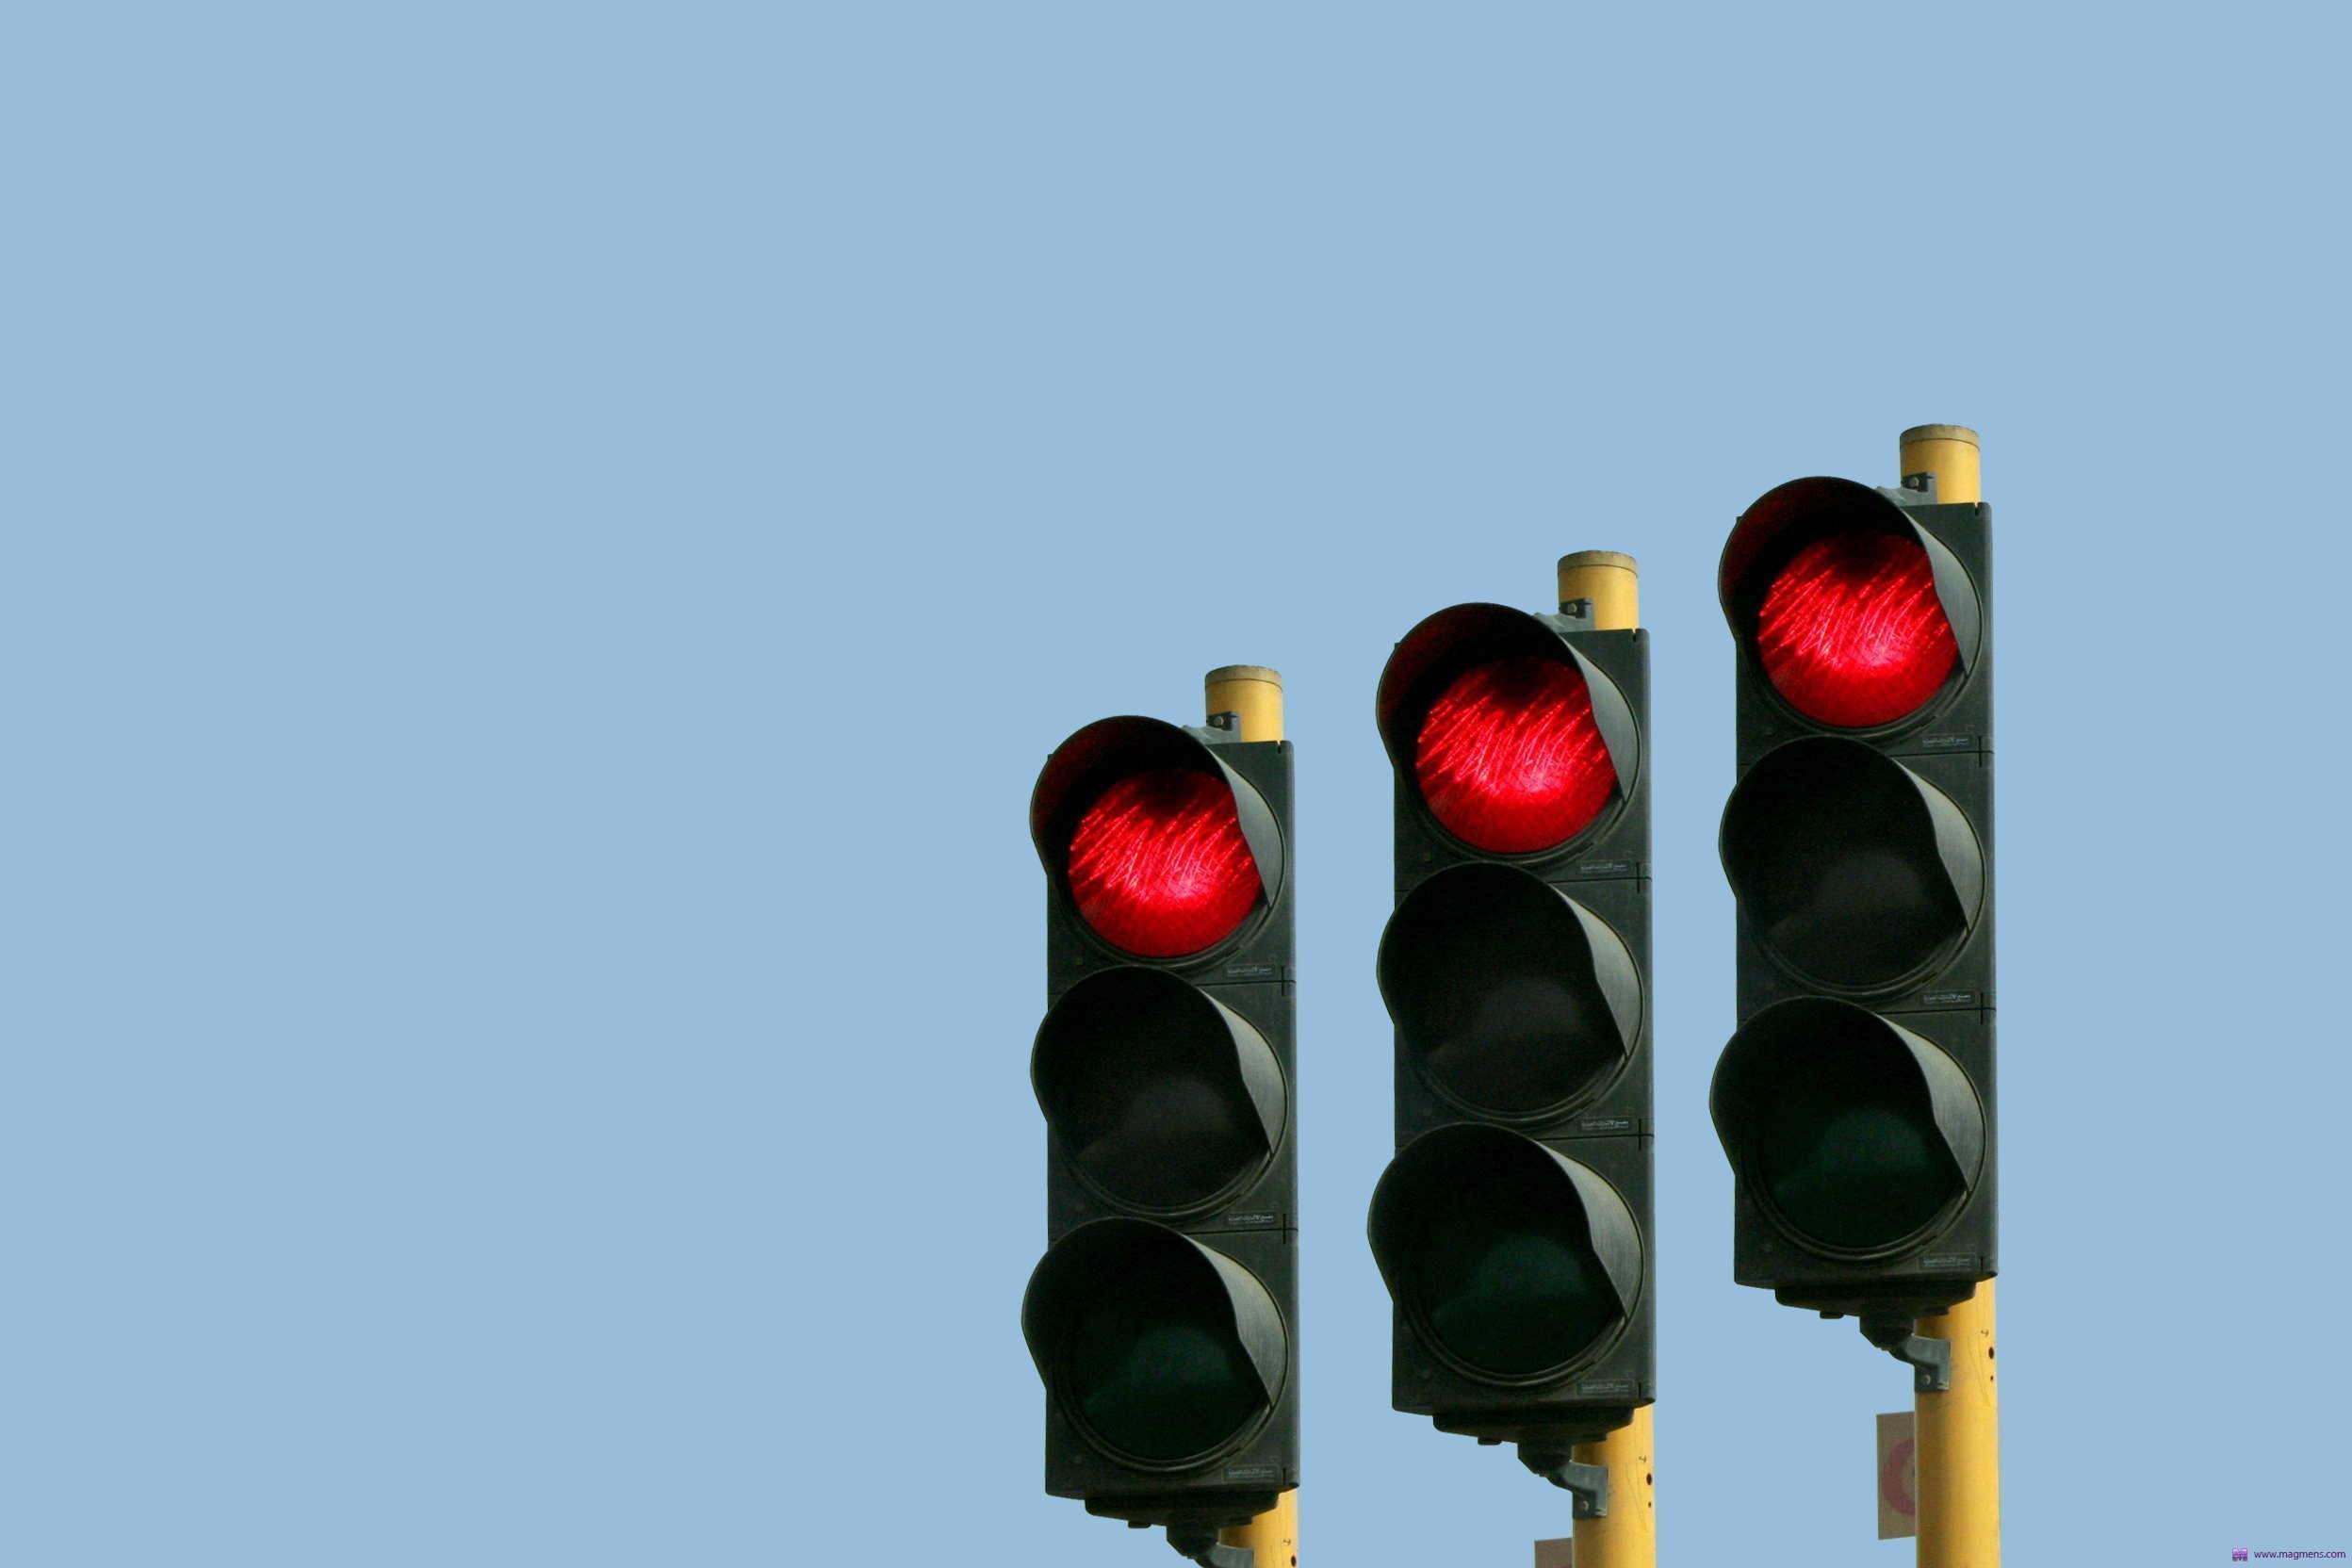 Traffic light red. Красный светофор. Красный свет светофора. Желтый свет светофора. Сигналы светофора.